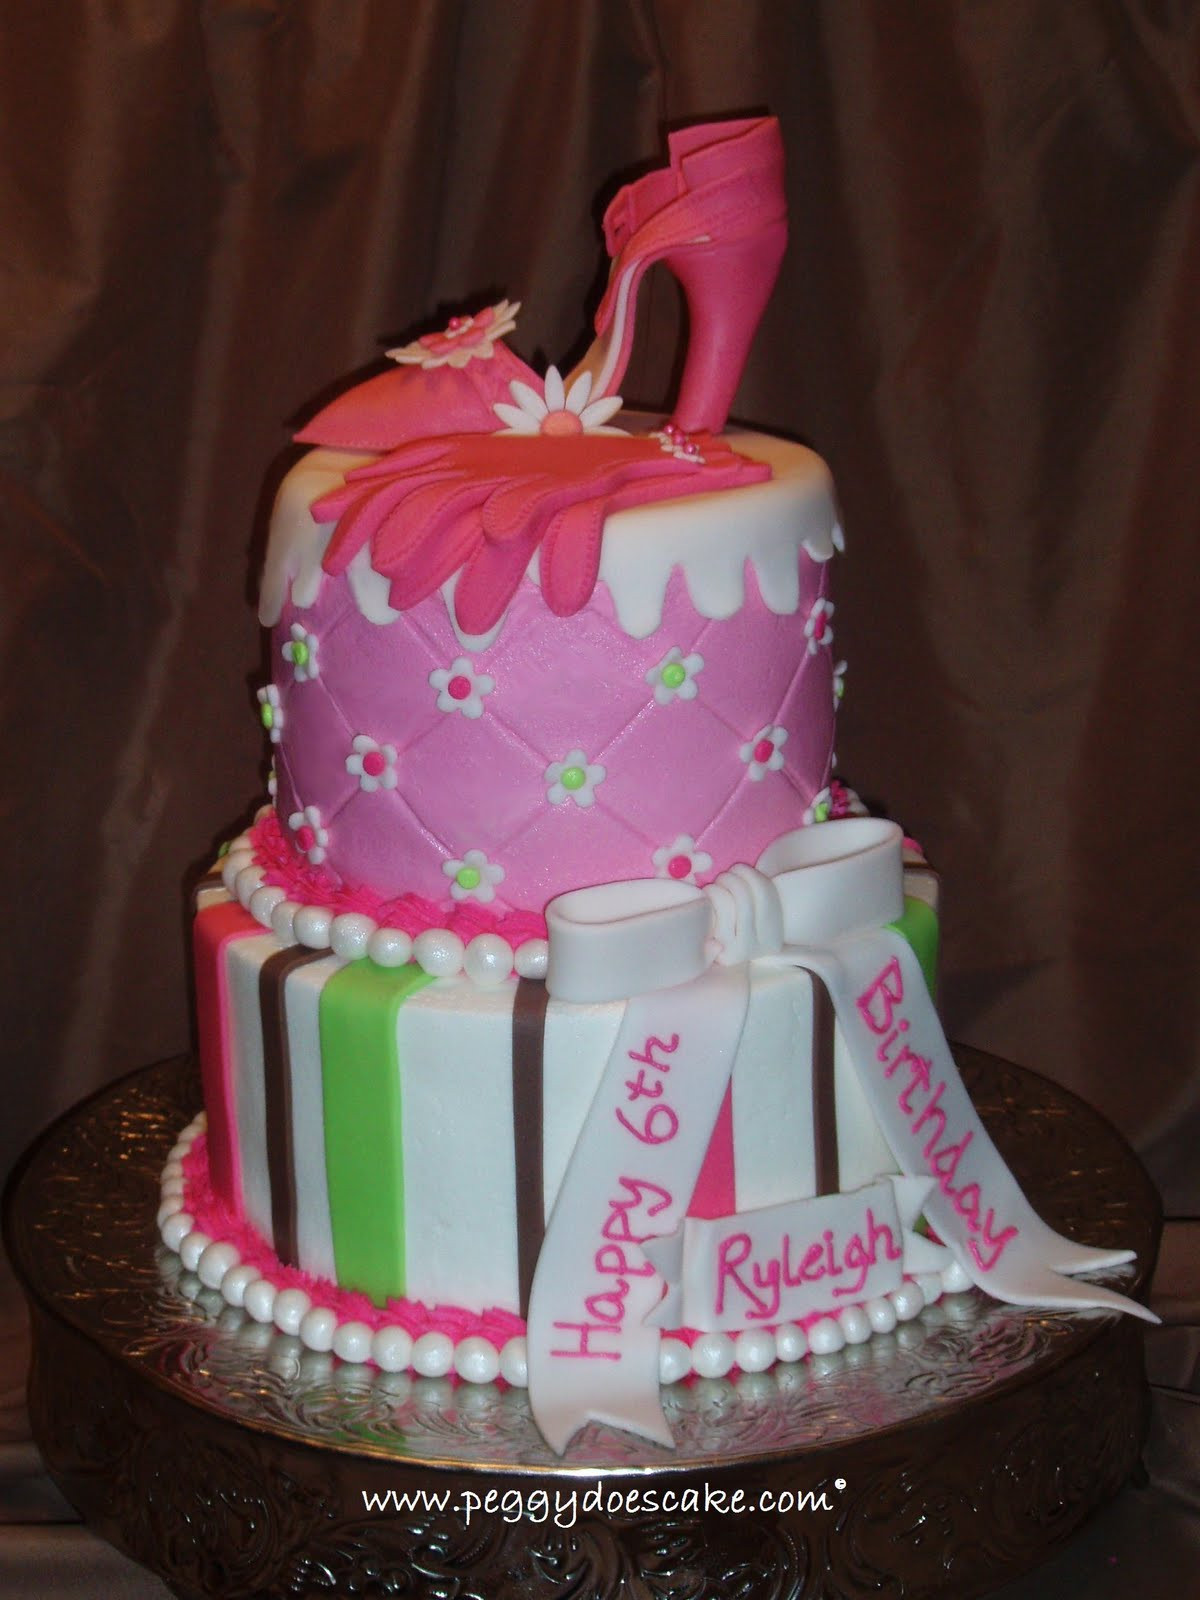 High Heel Birthday Cake
 Peggy Does Cake Cake Update Ryleigh s "high heel shoe